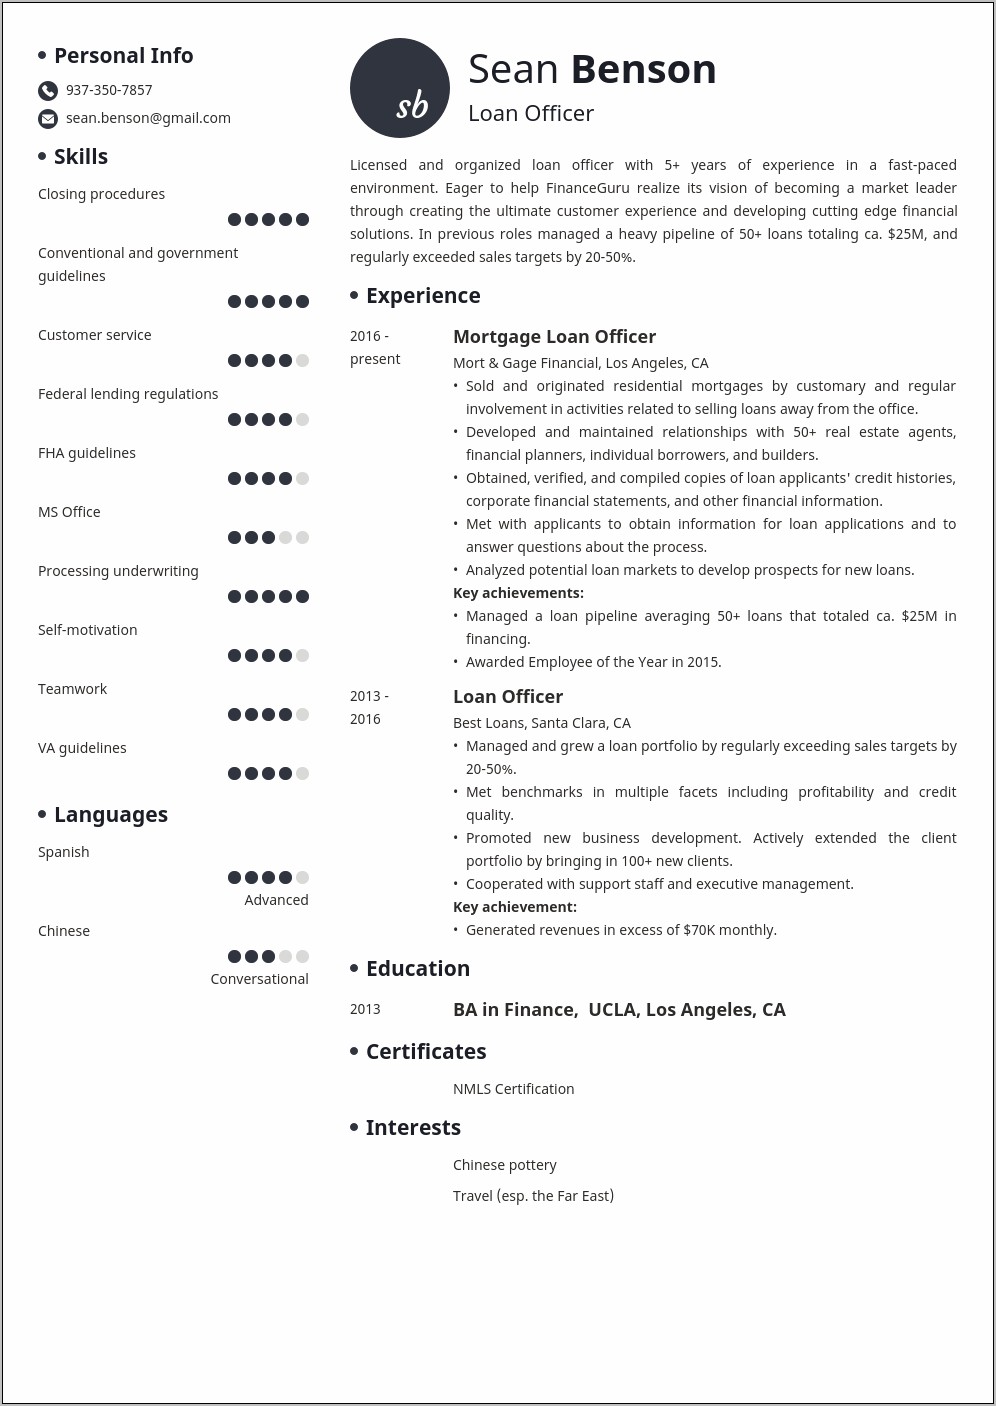 Mortgage Loan Officer Job Description For Resume